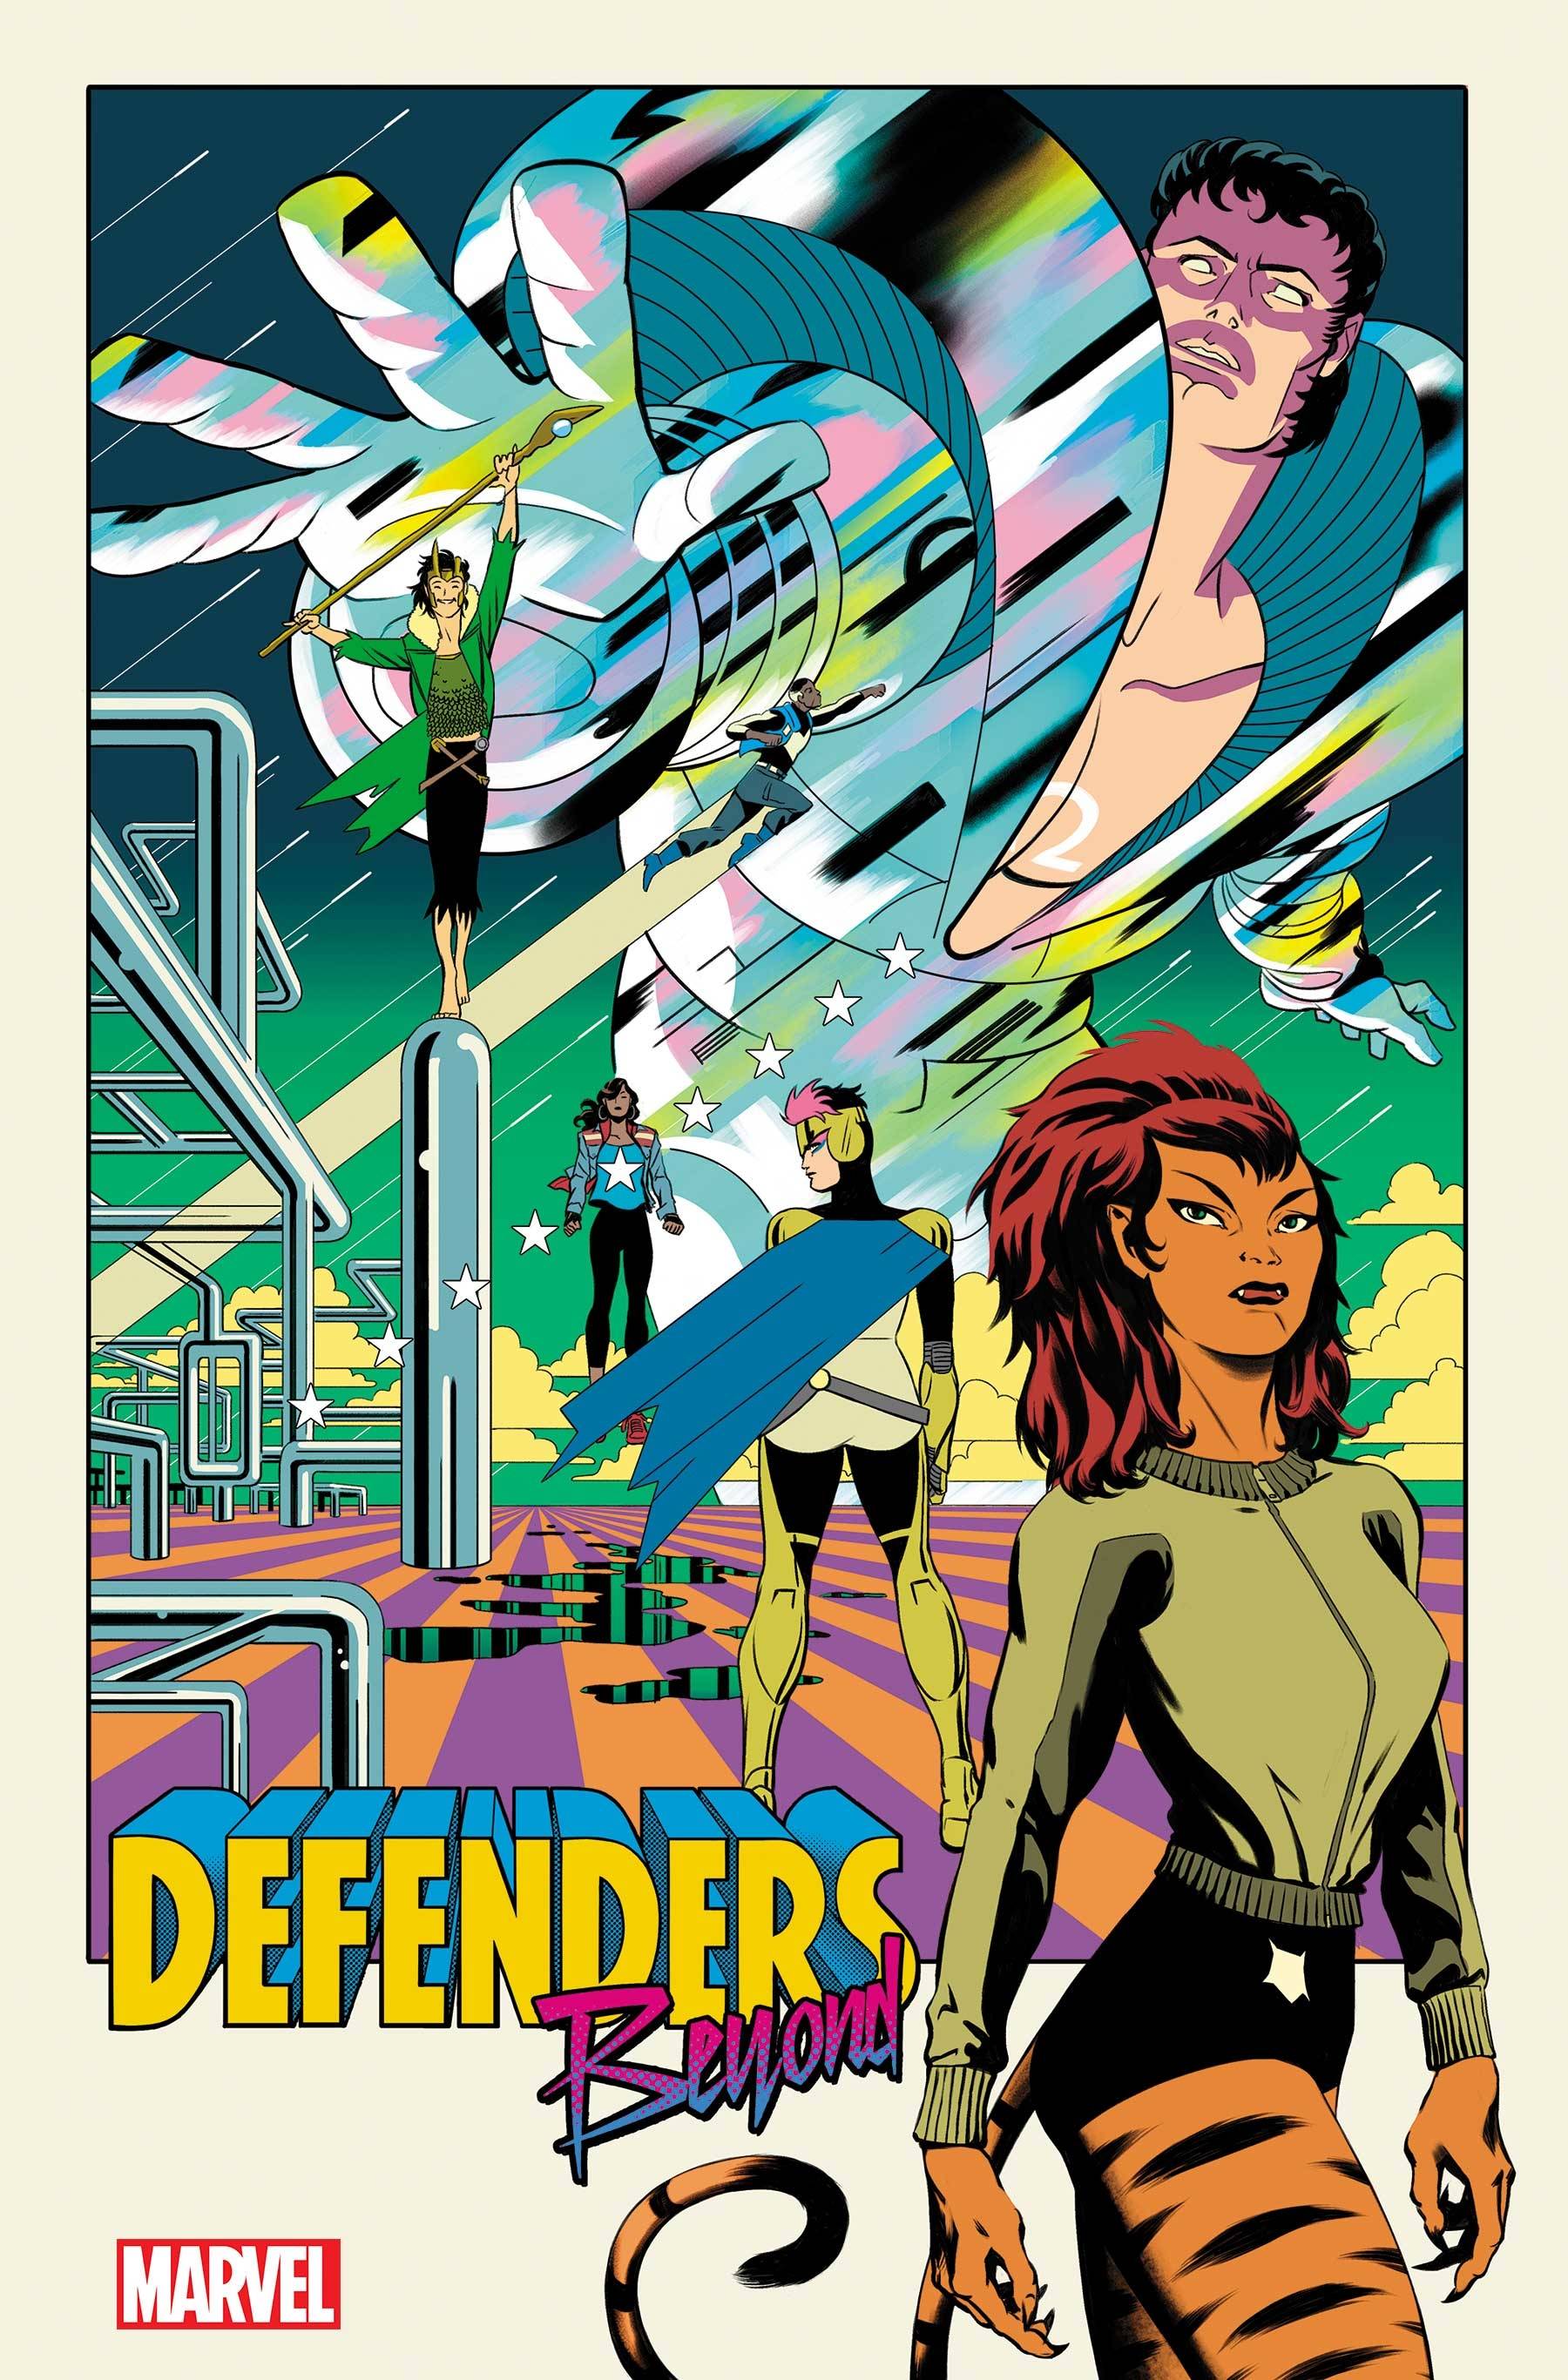 Defenders Beyond #2 (Of 5) (07/20/2022) - State of Comics